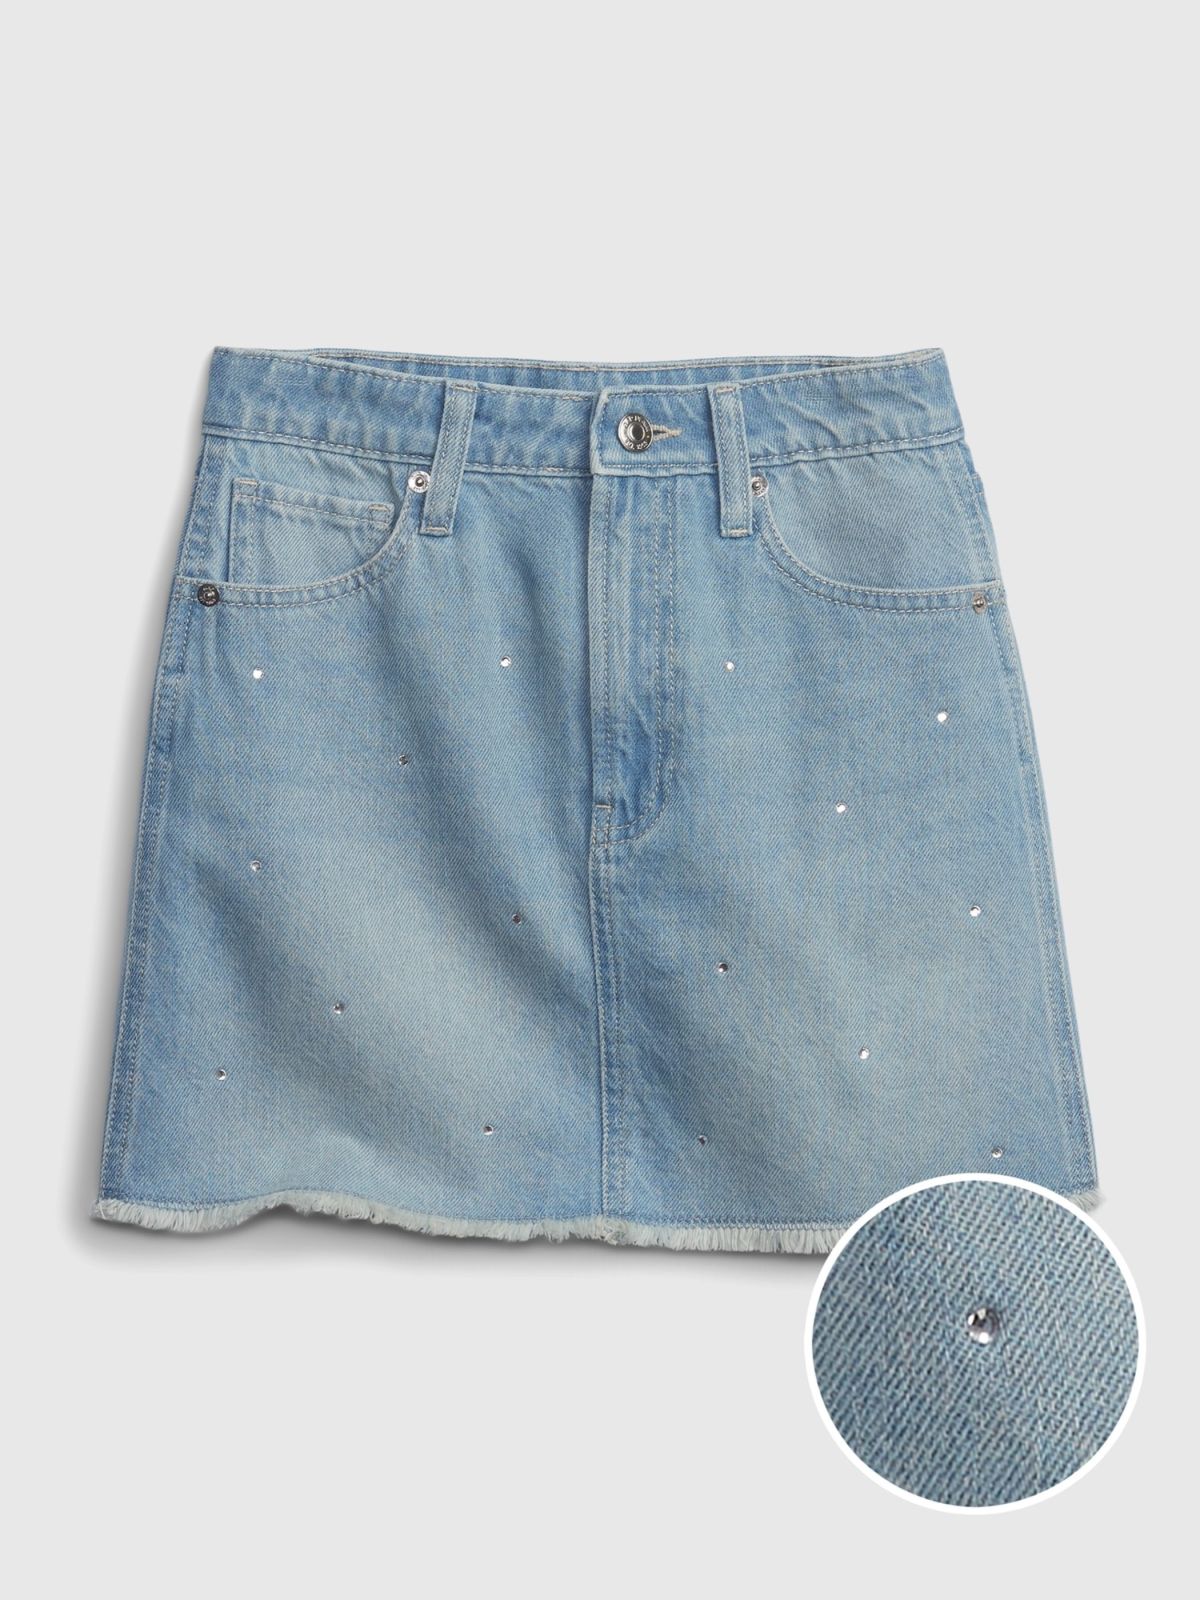  חצאית ג'ינס בעיטור אבנים / בנות של GAP